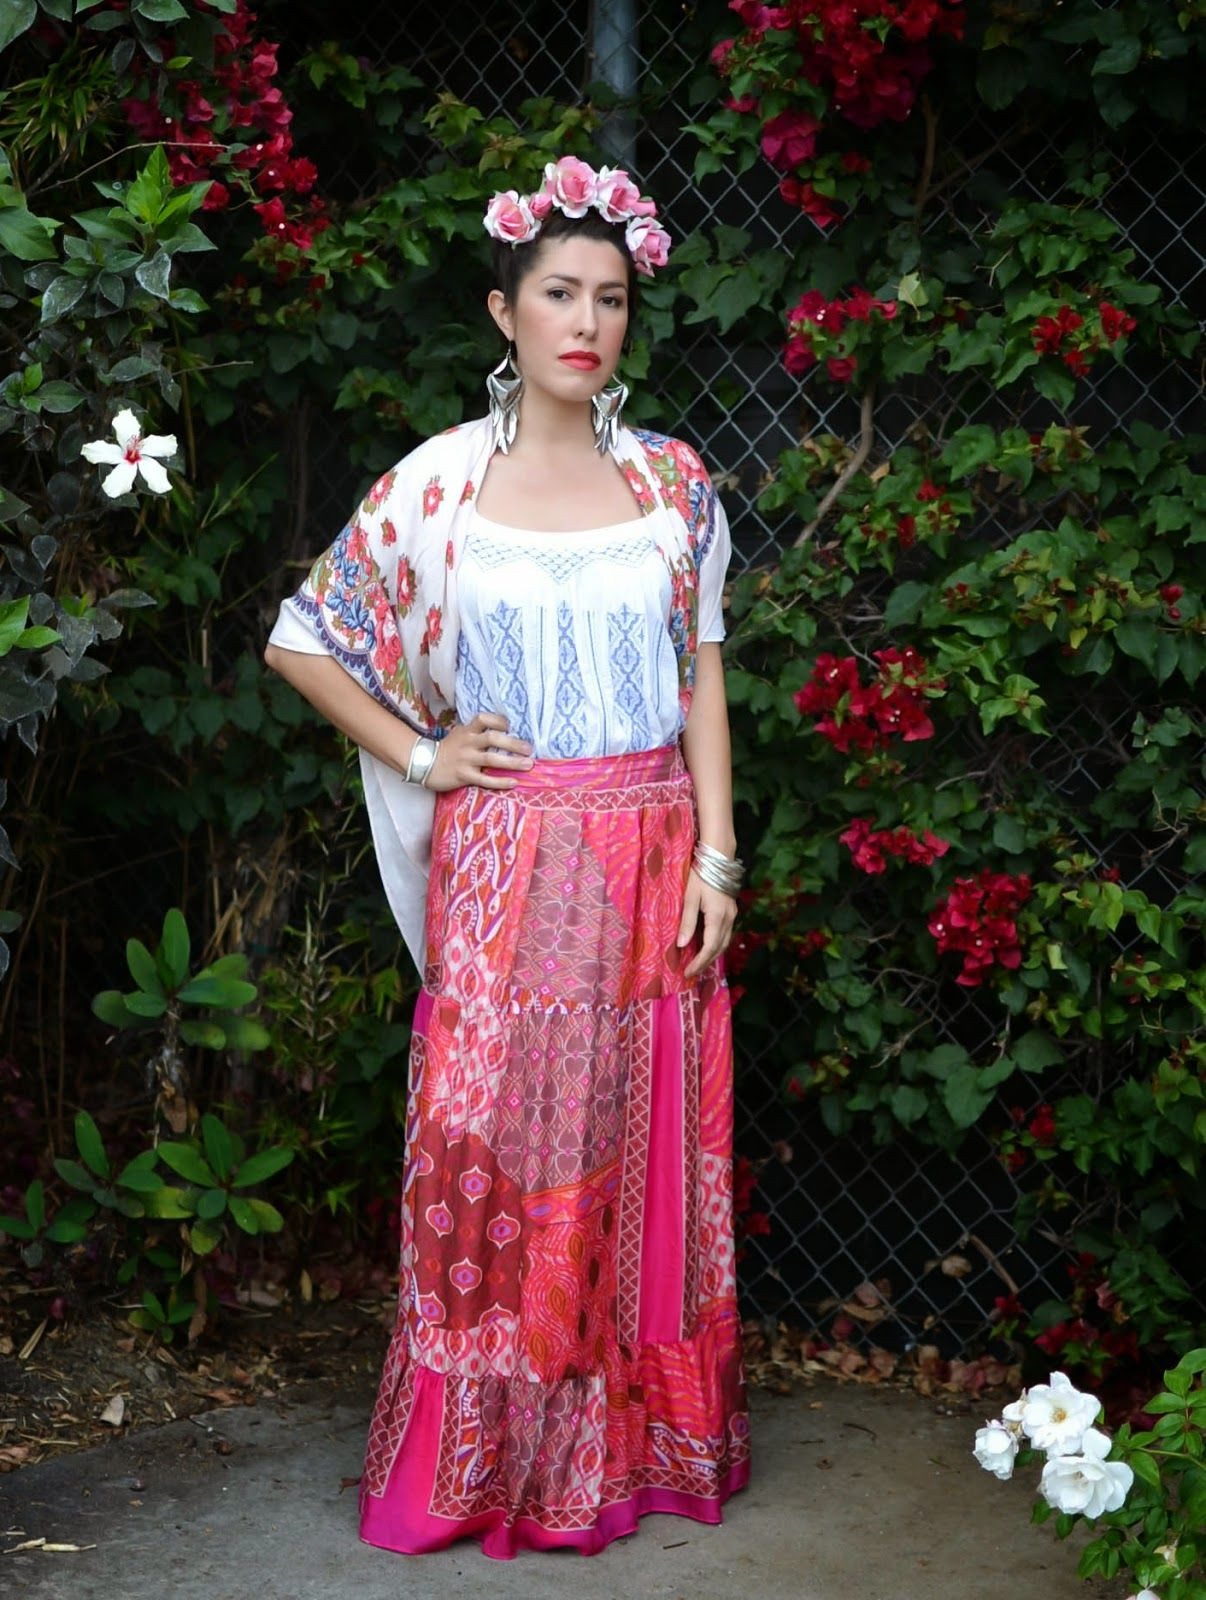 Best ideas about Frida Kahlo Costume DIY
. Save or Pin DIY Halloween Costume Frida Kahlo Spanish Muse diy Now.